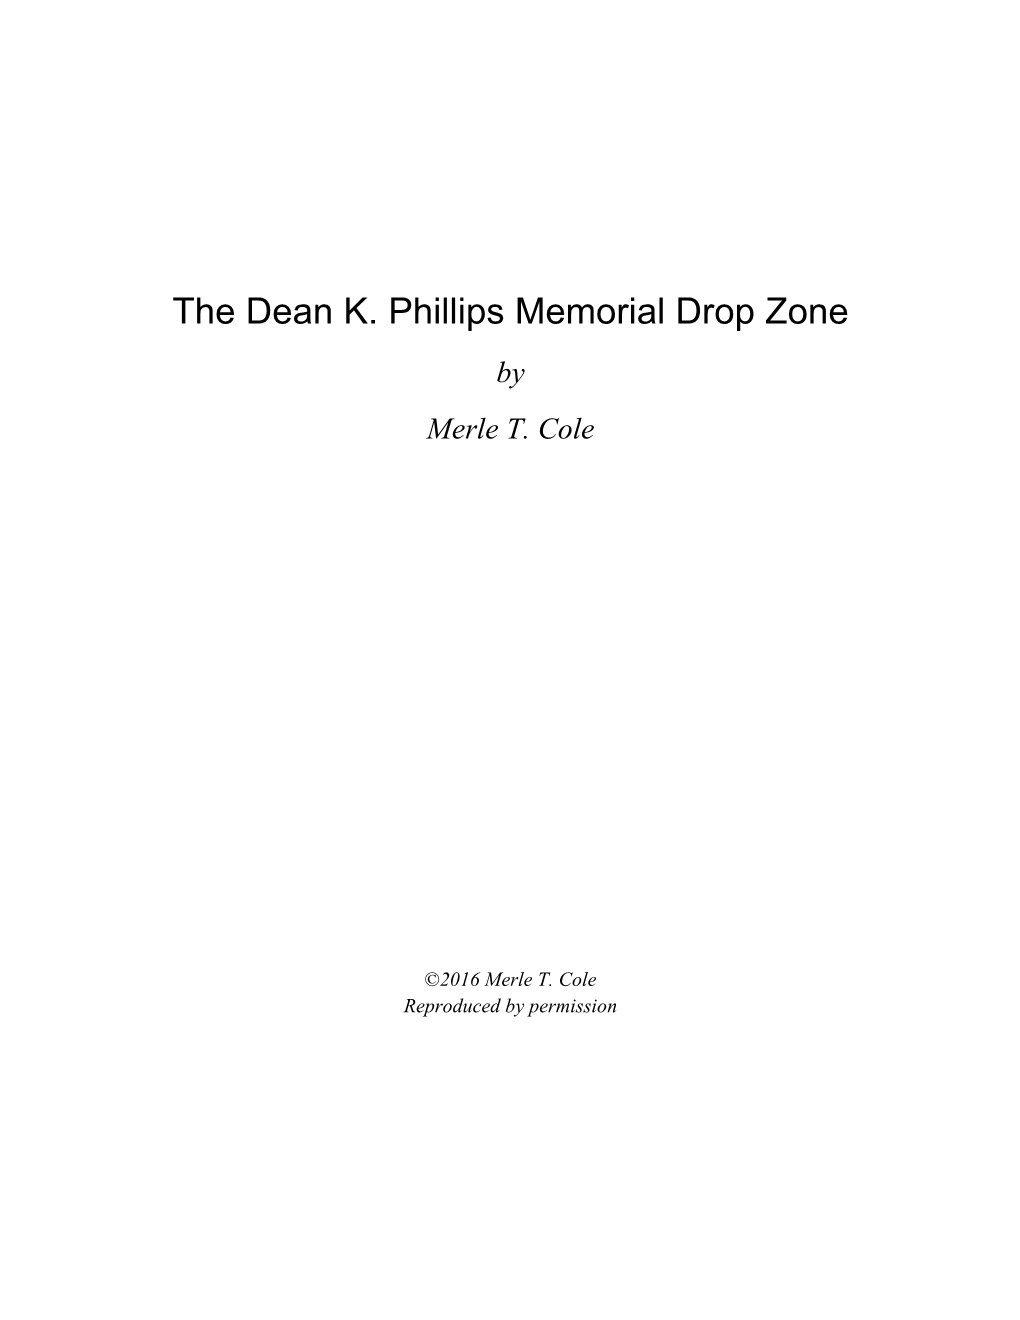 The Dean K. Phillips Memorial Drop Zone by Merle T